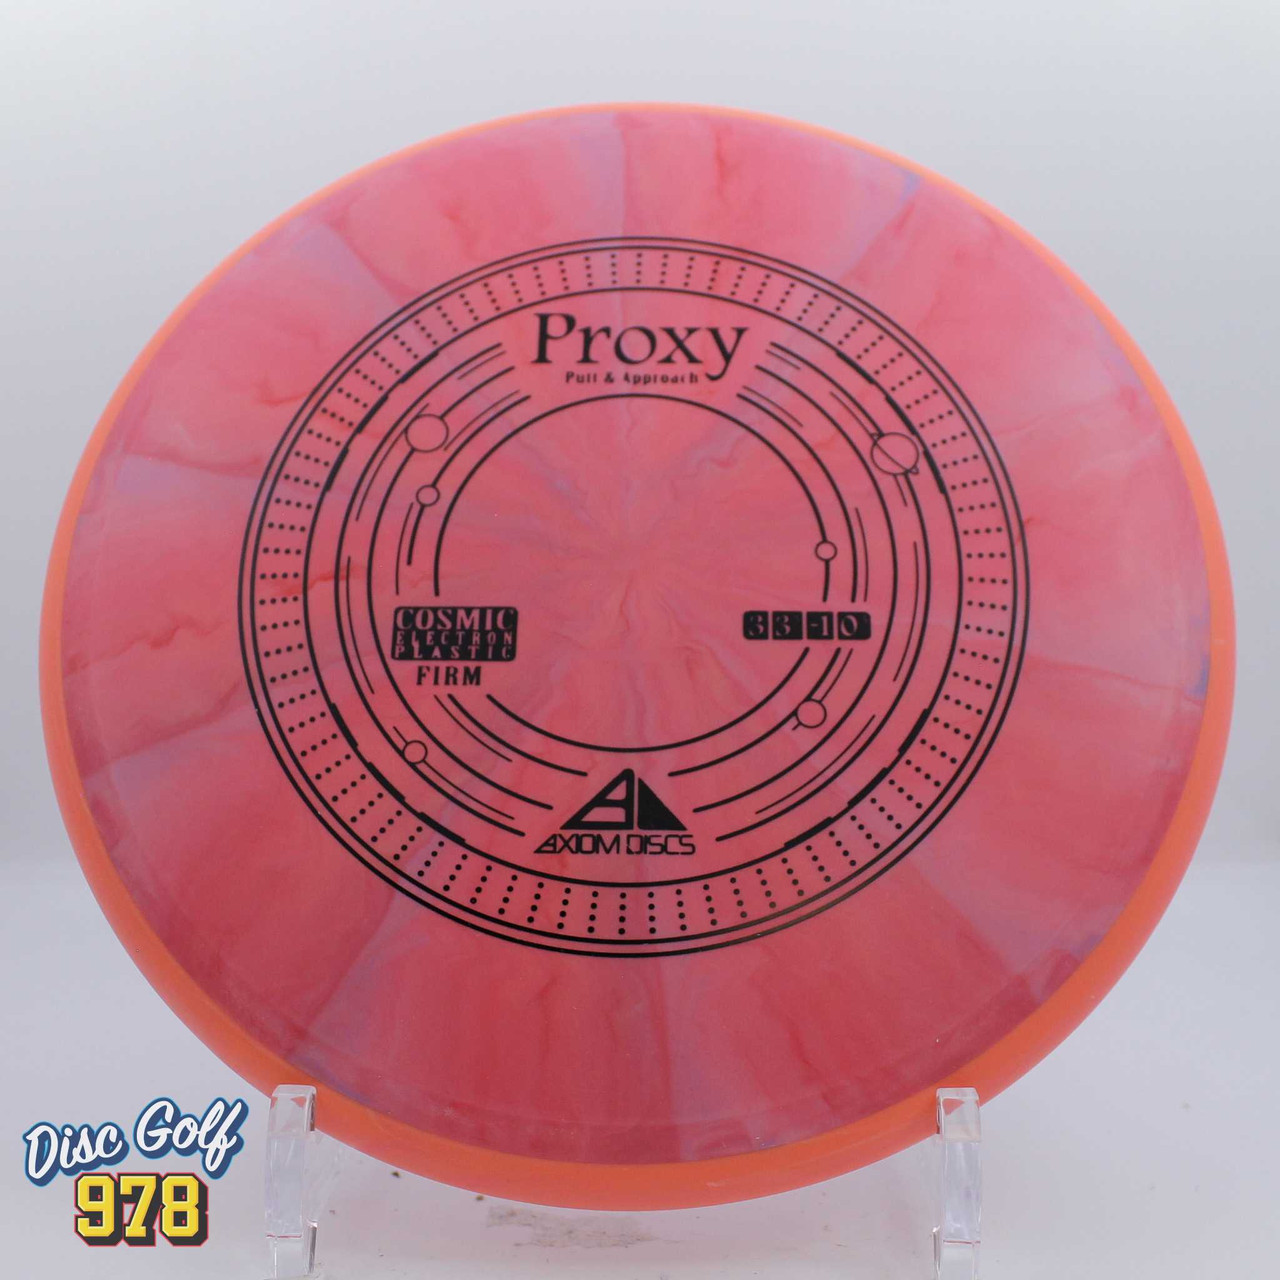 Axiom Proxy Cosmic Electron Firm Pink-Orange 171.2g